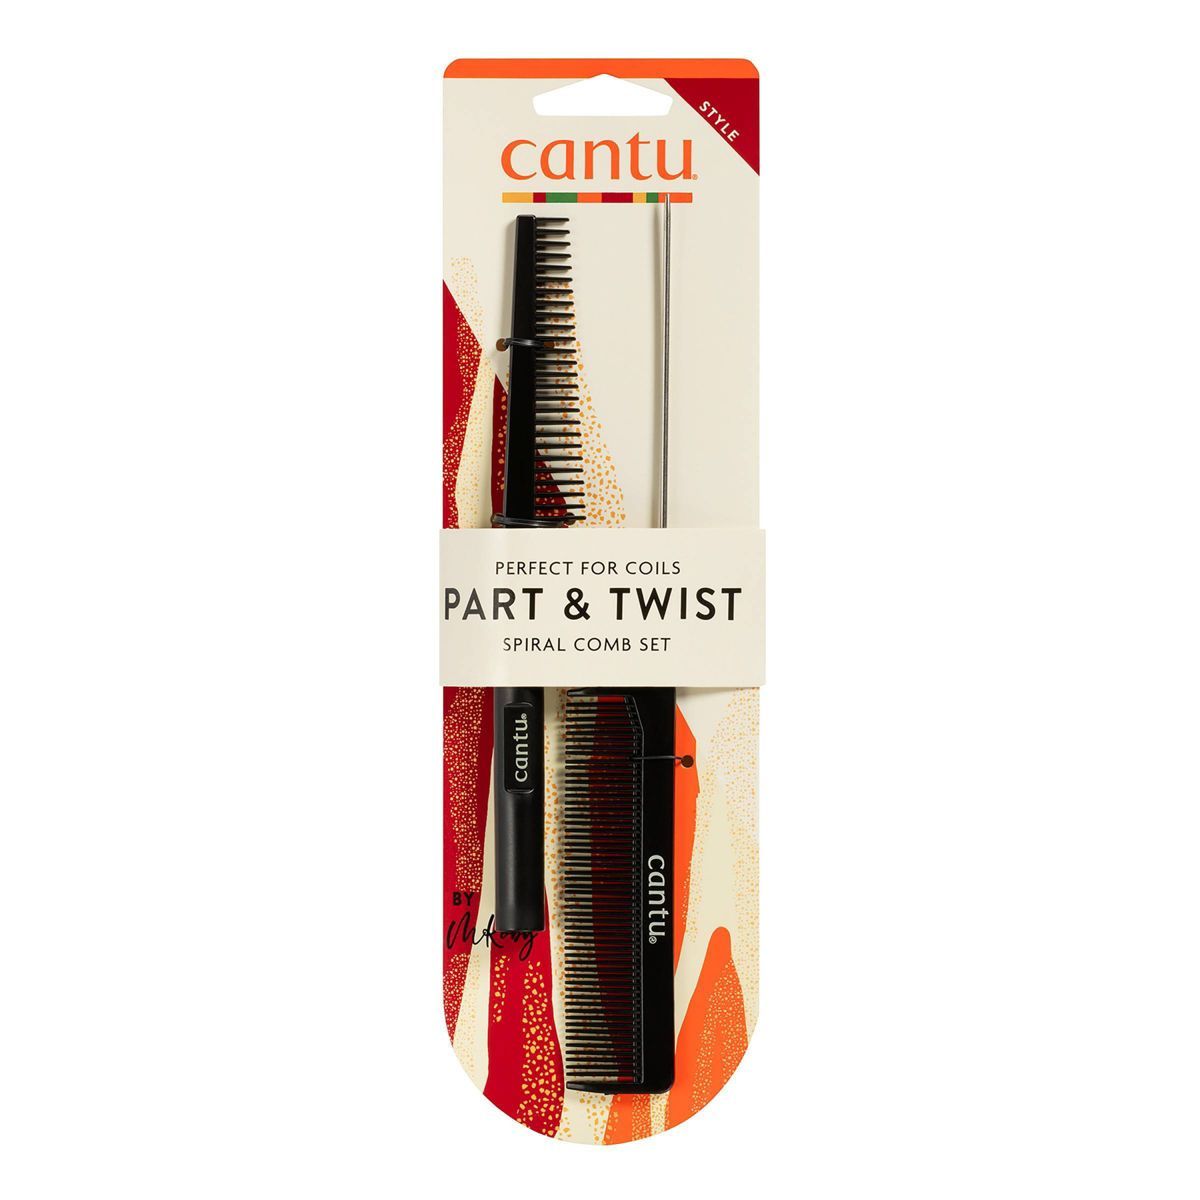 Cantu Style Part & Twist Comb Set - 2ct | Target